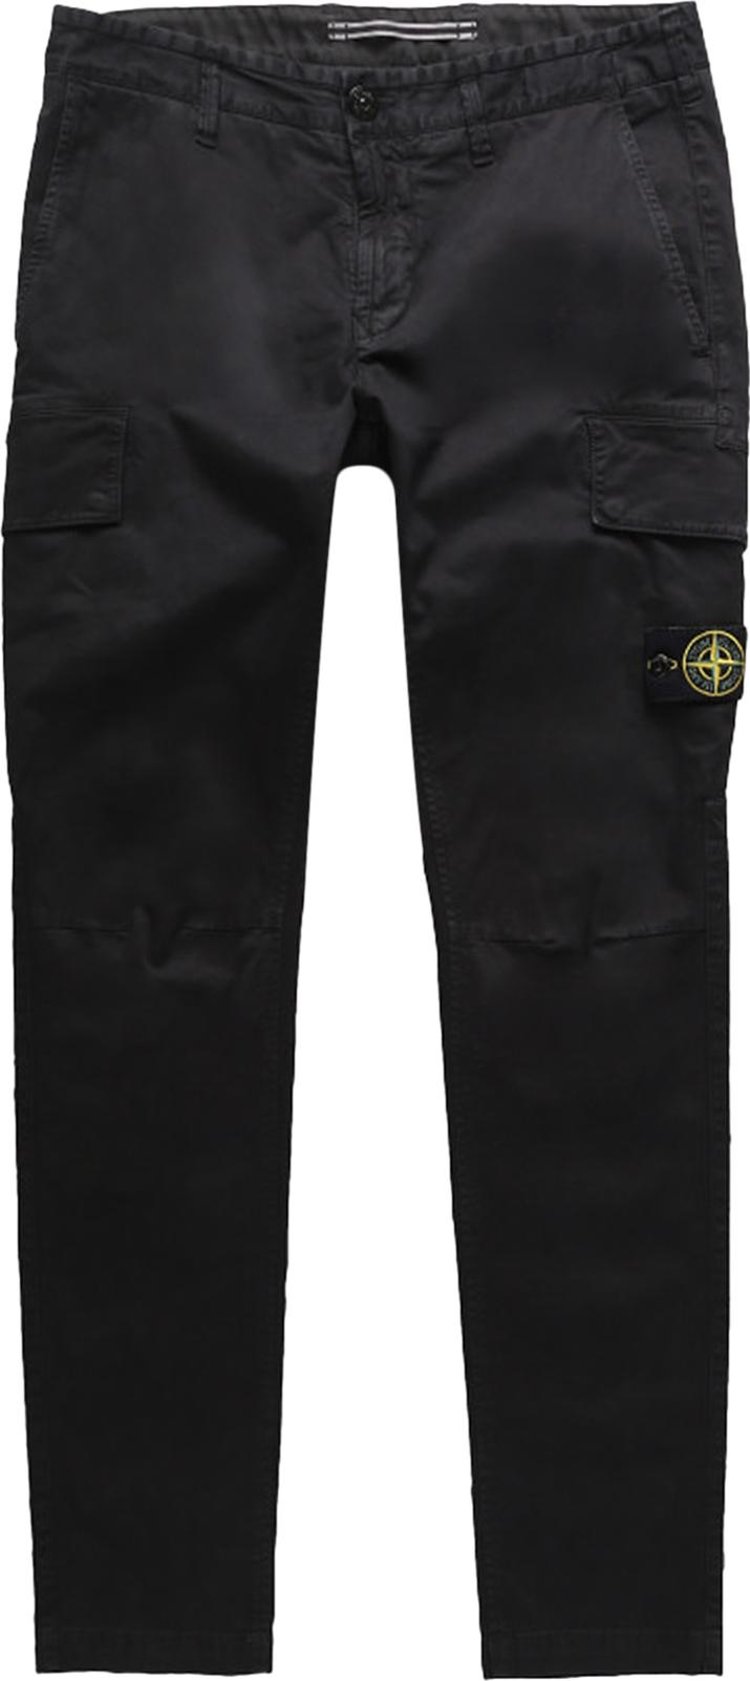 Buy Stone Island Cargo Pants 'Black' - 761530604 V0129 | GOAT